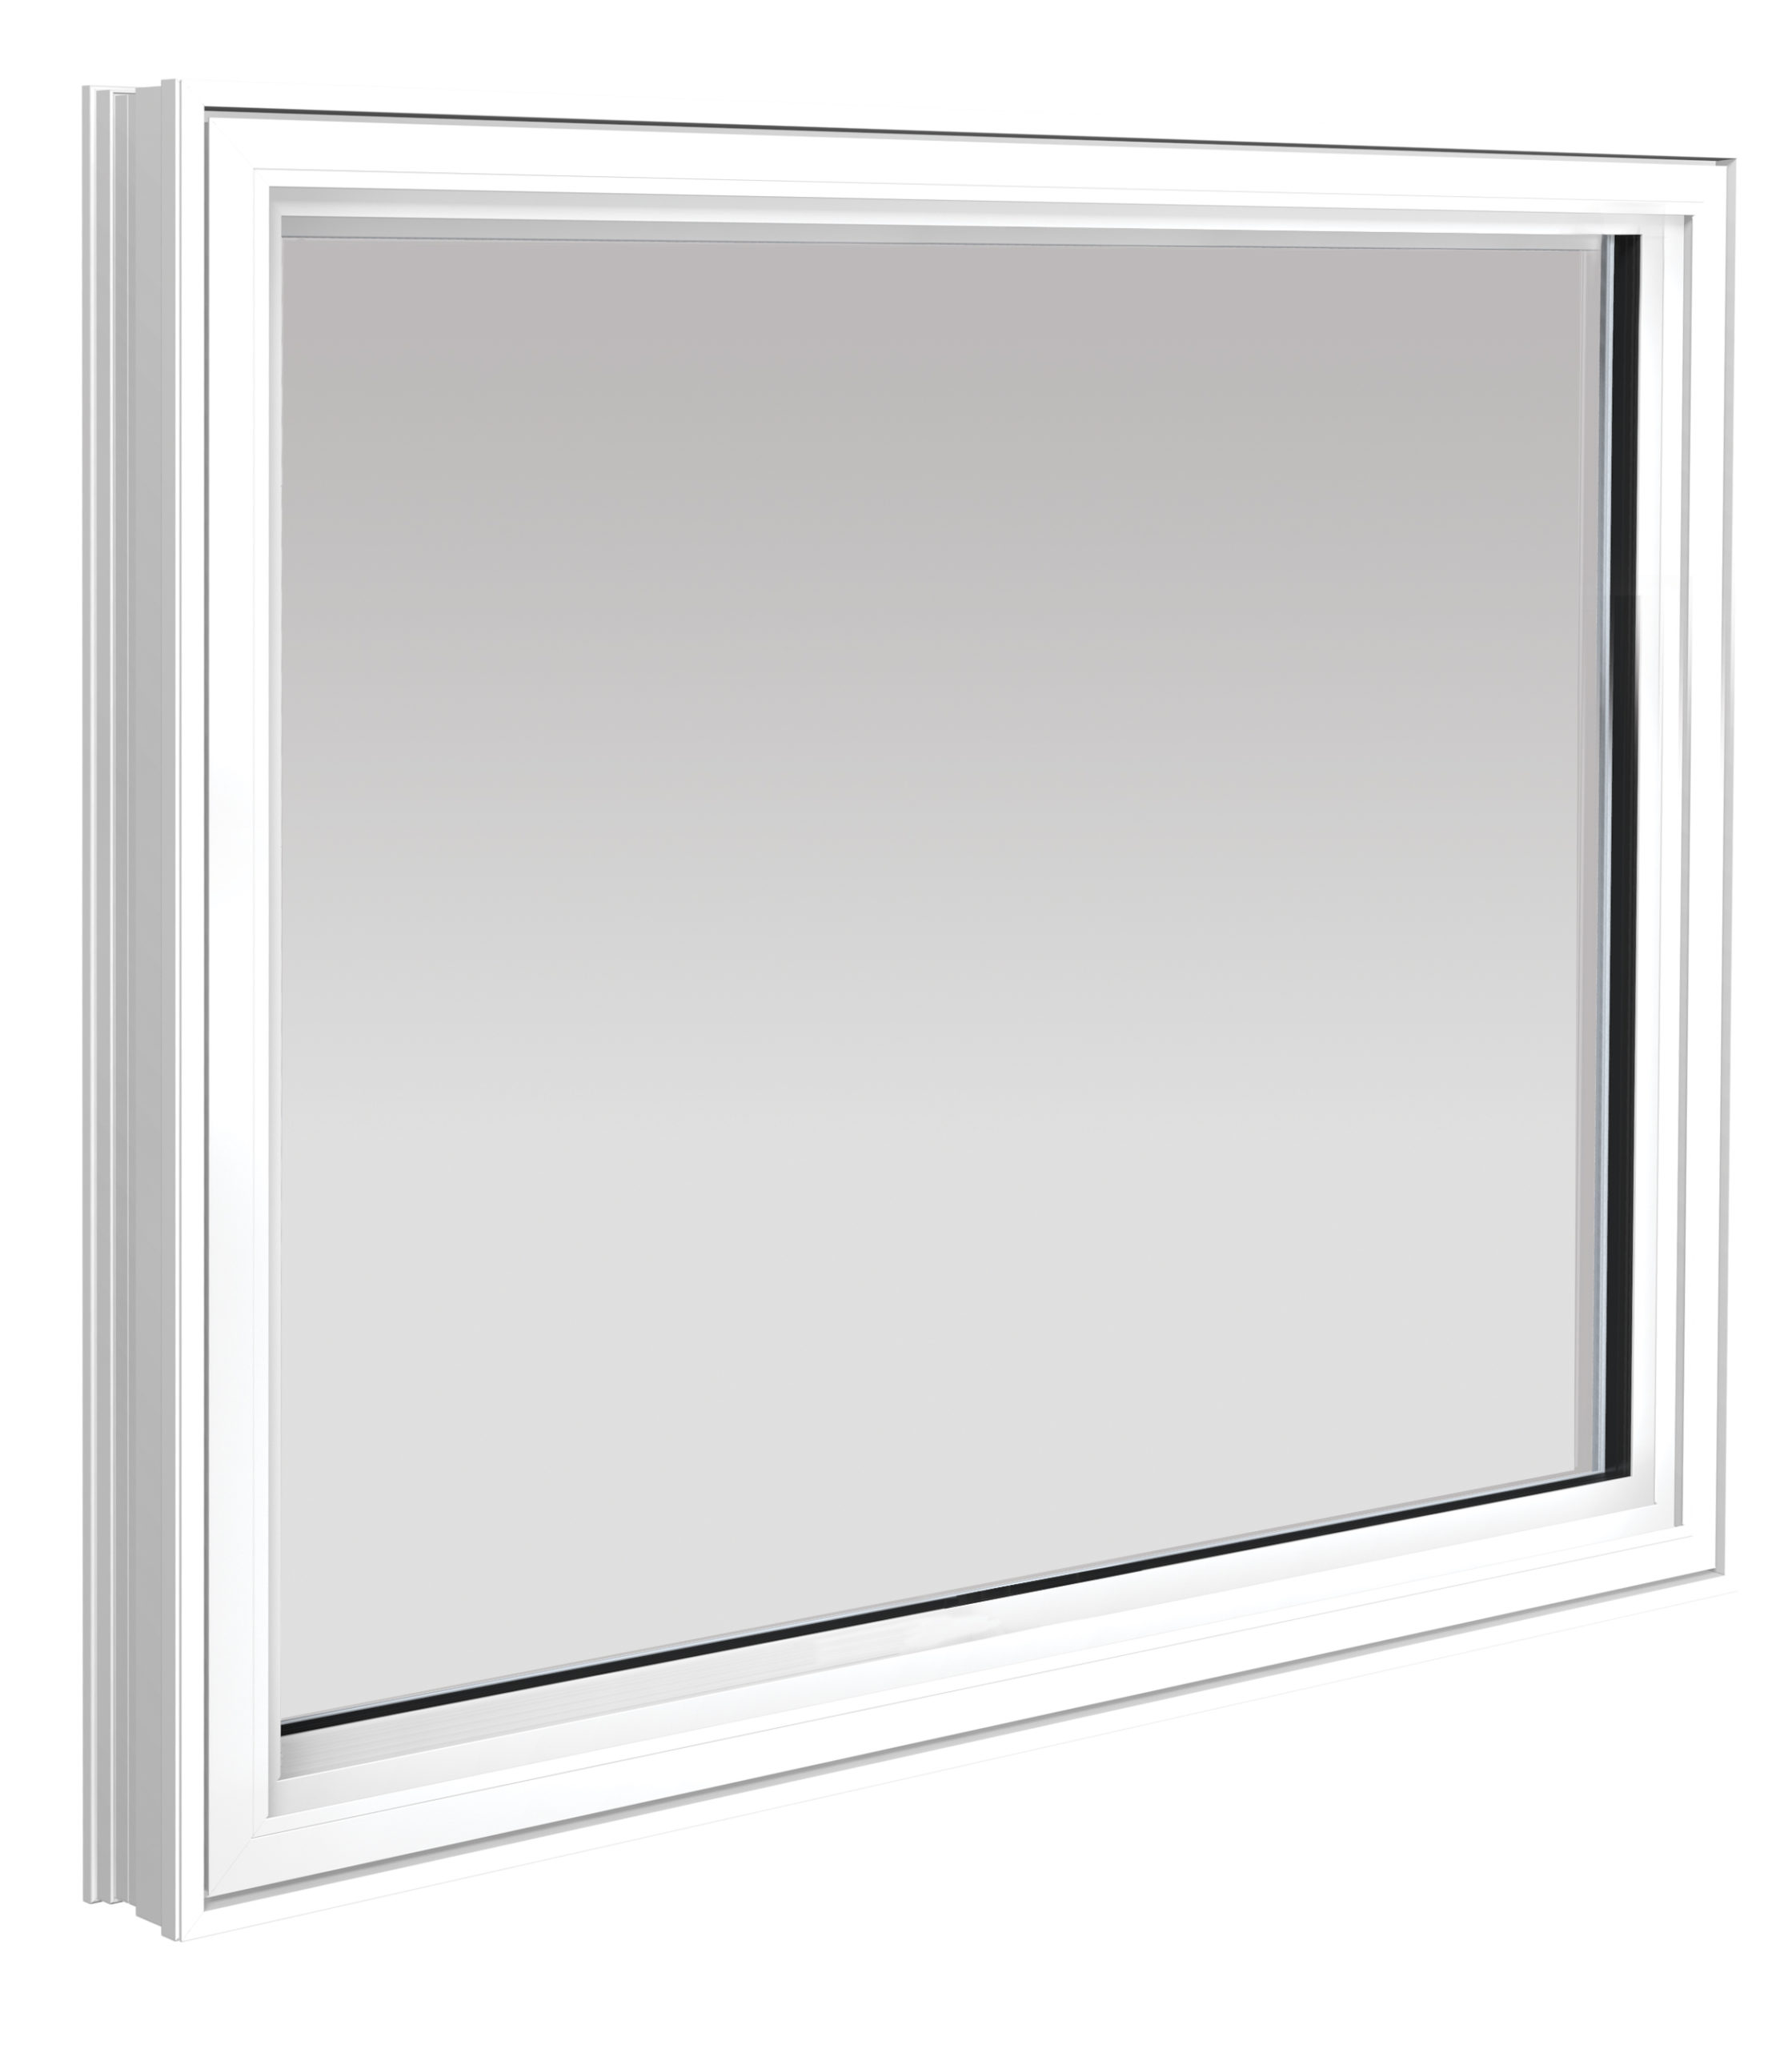 Gentek 80 Series Picture window in White